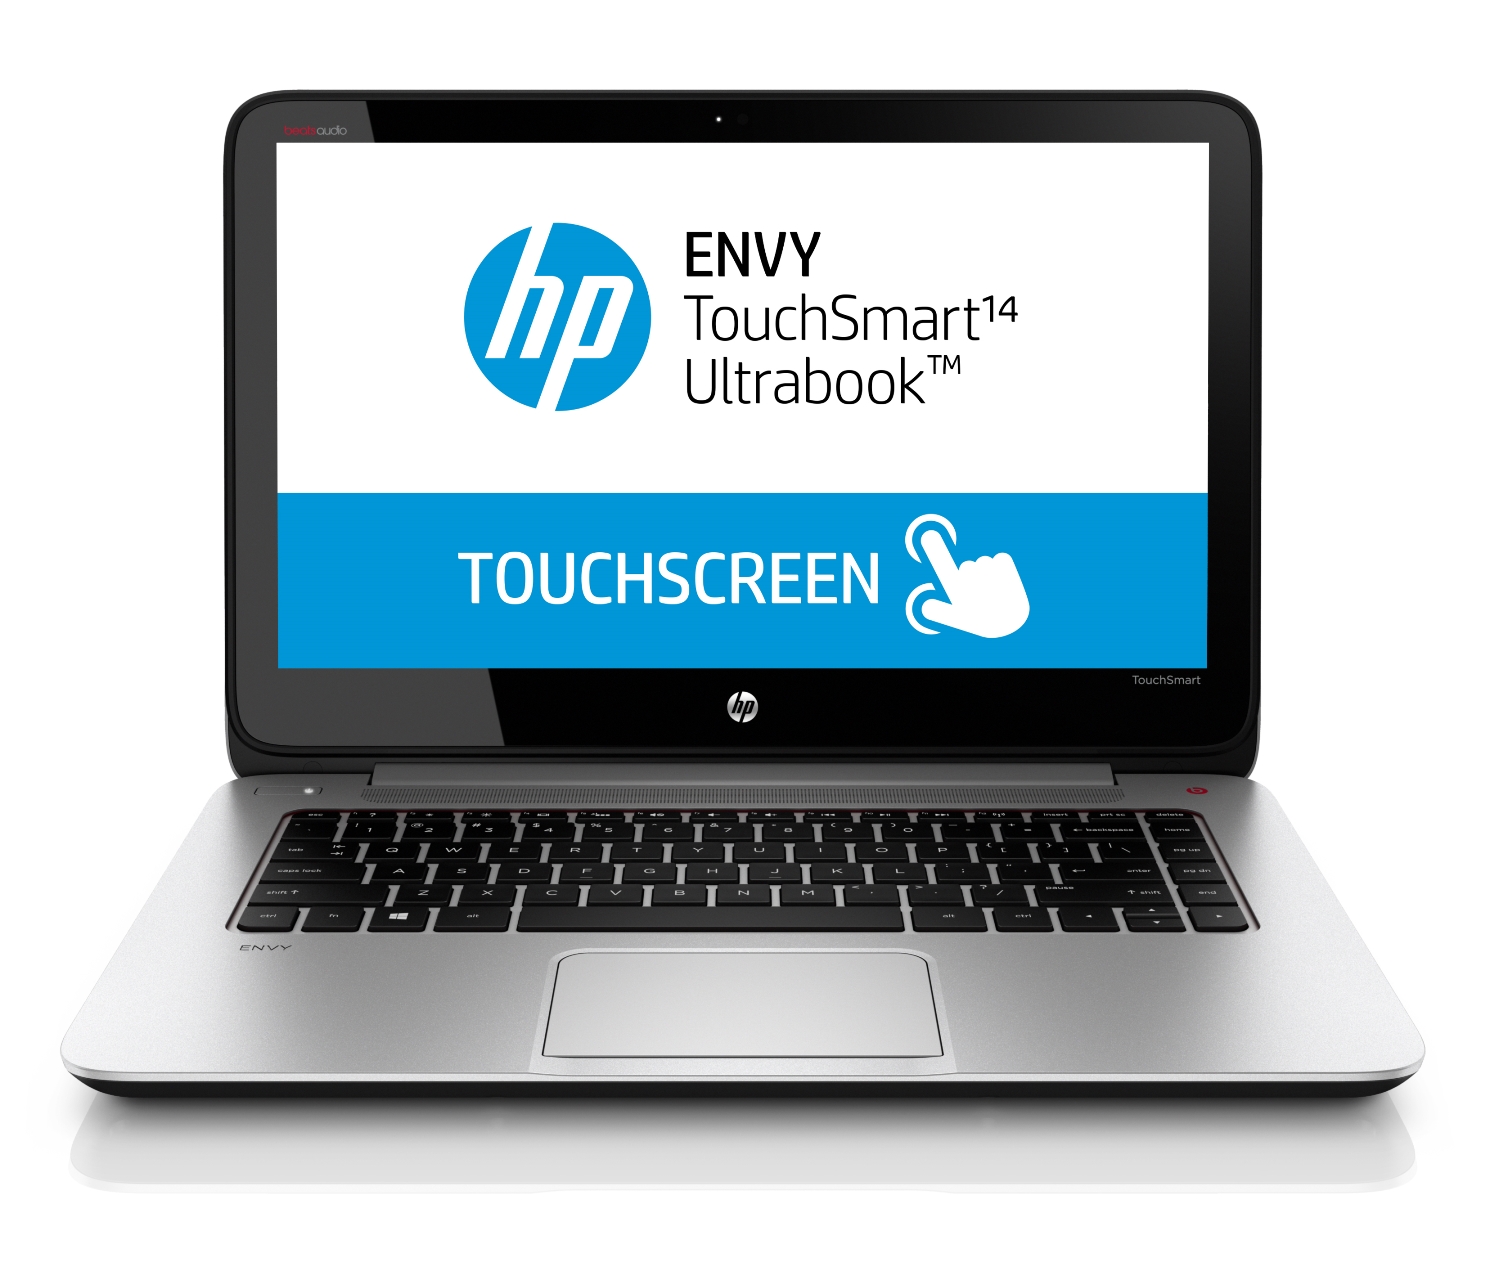 ENVY TouchSmart 14 Ultrabook 2r